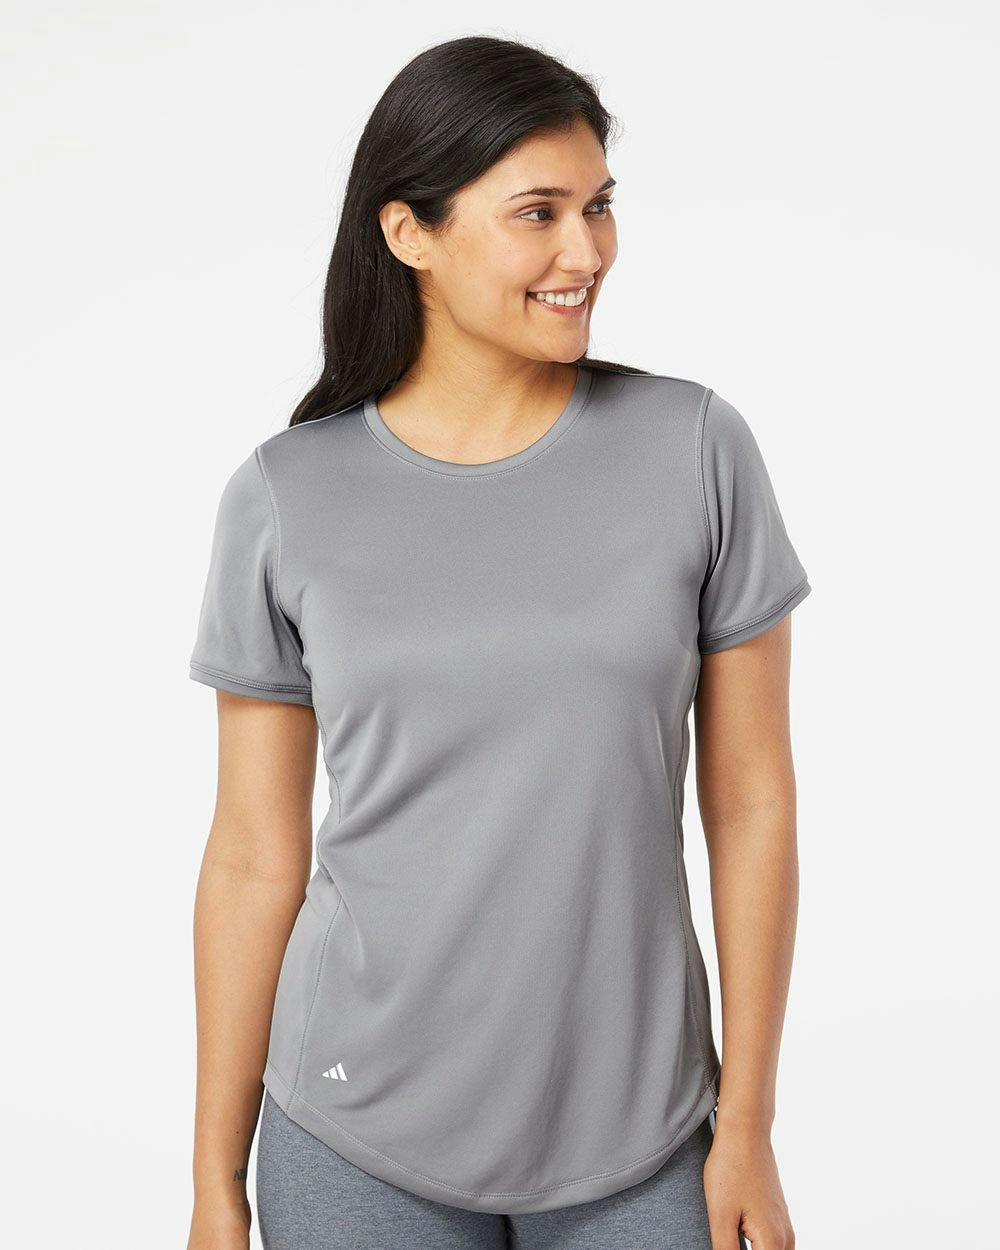 Image for Women's Sport T-Shirt - A377